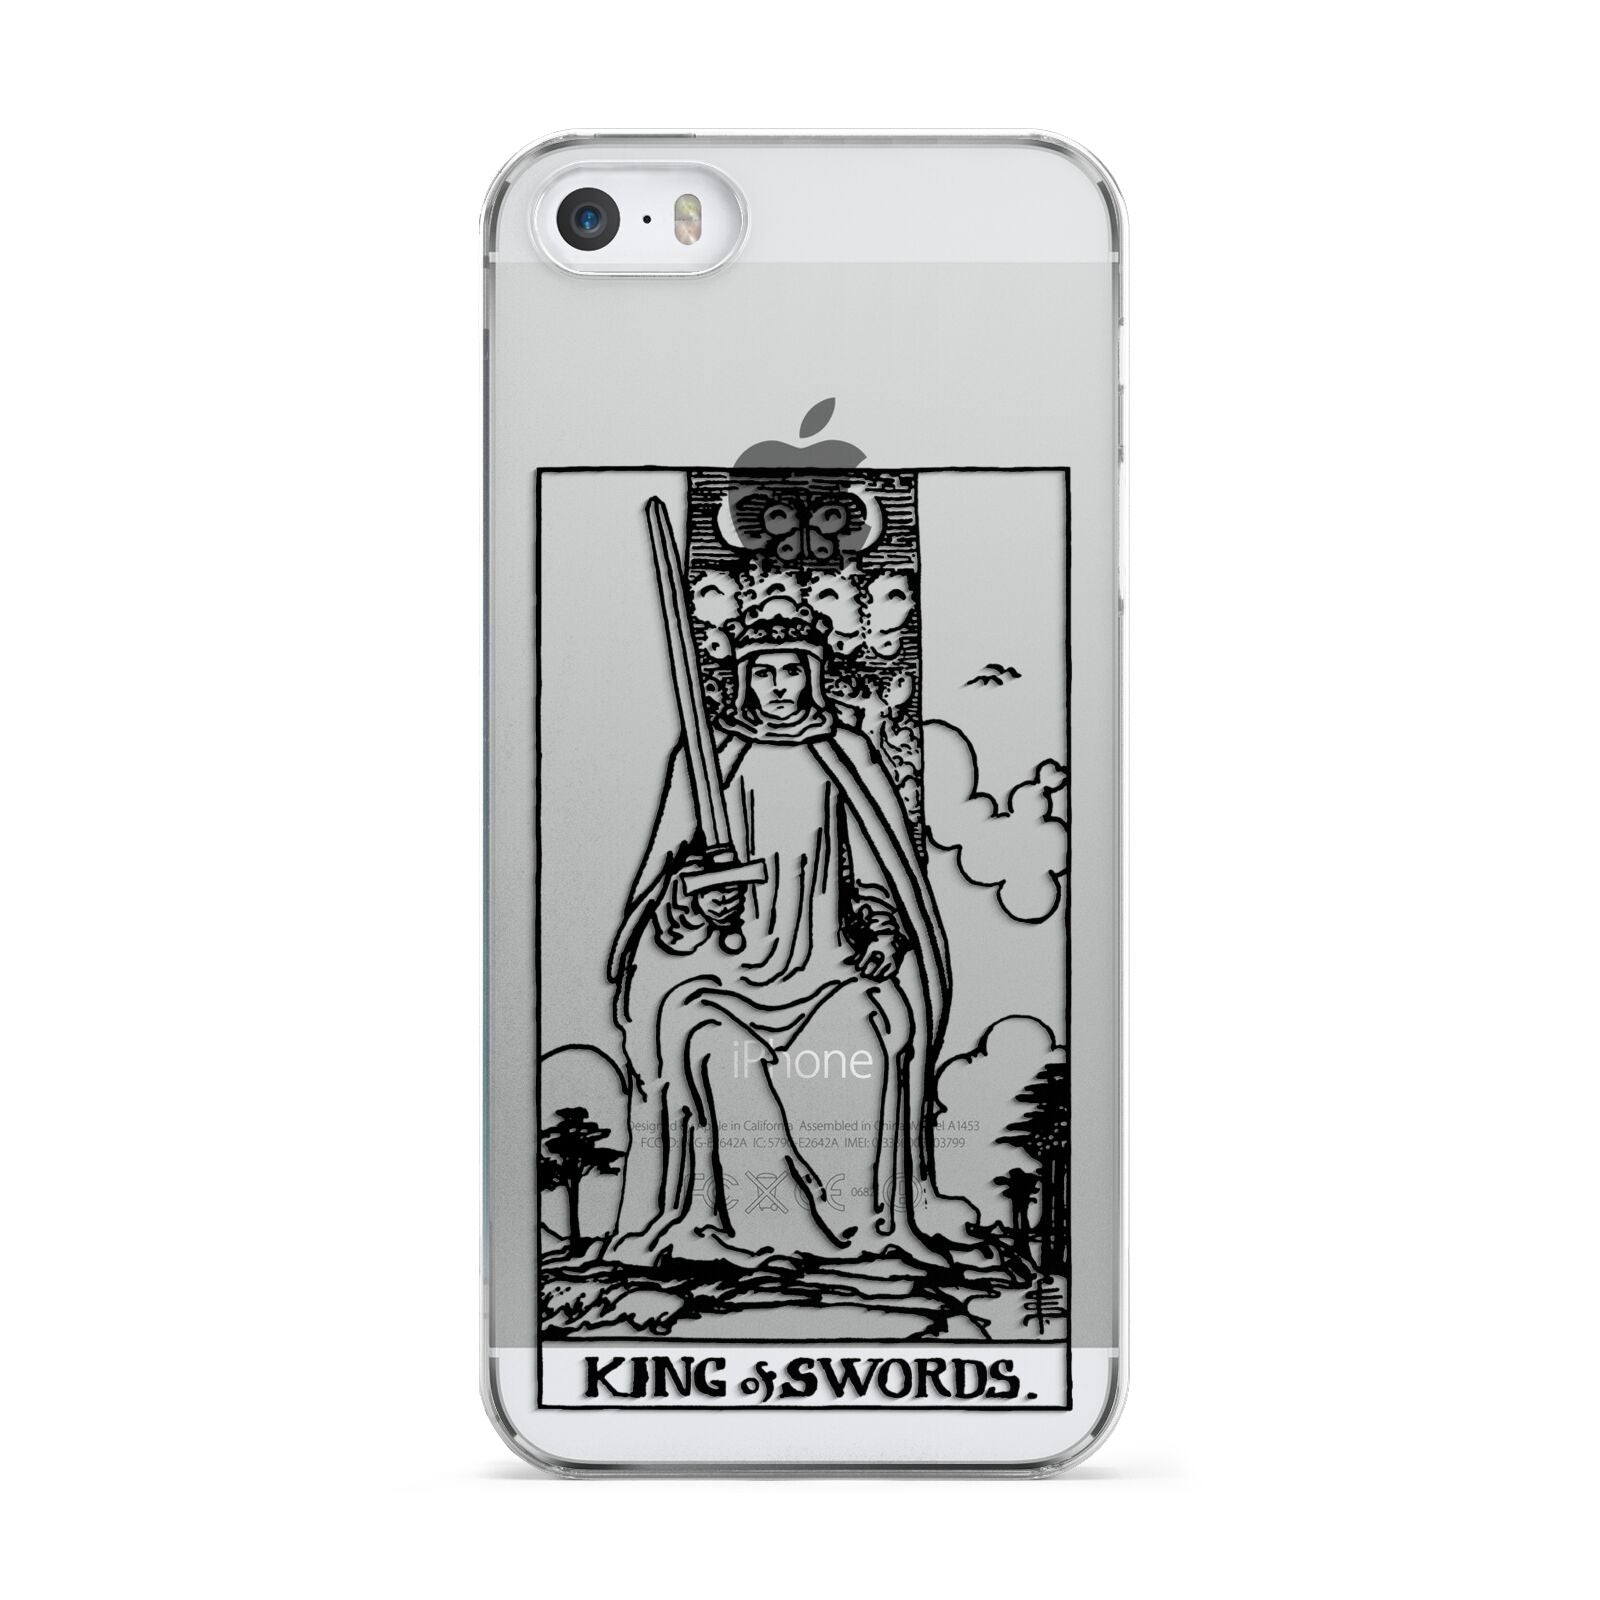 King of Swords Monochrome Apple iPhone 5 Case